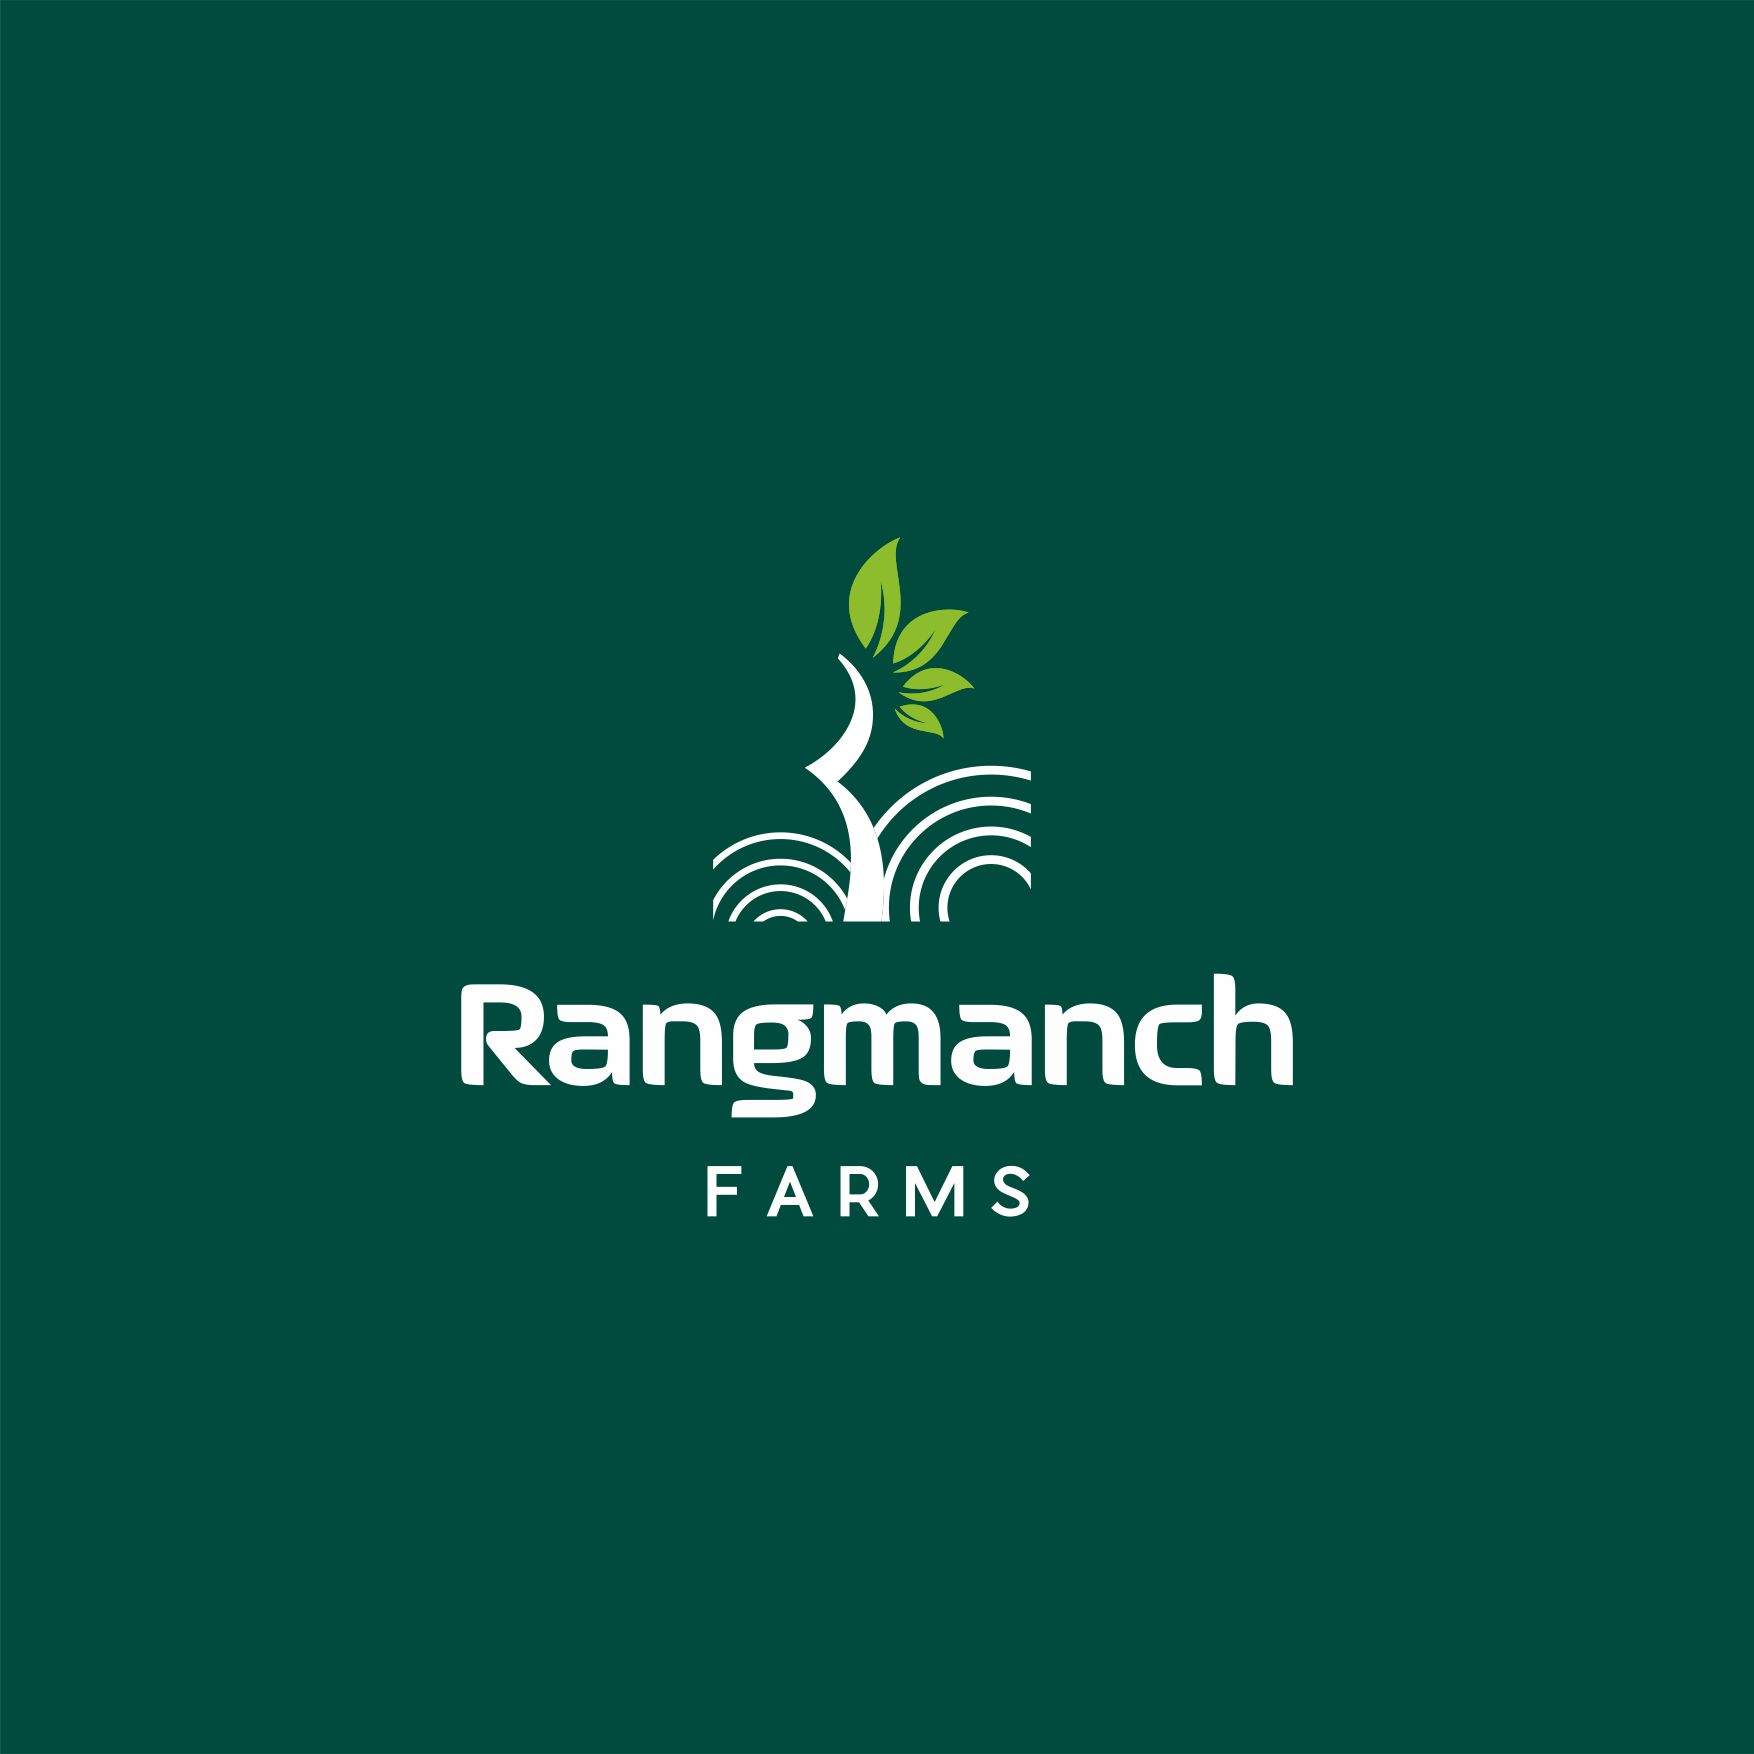 Rangmanch Farms|Water Park|Entertainment